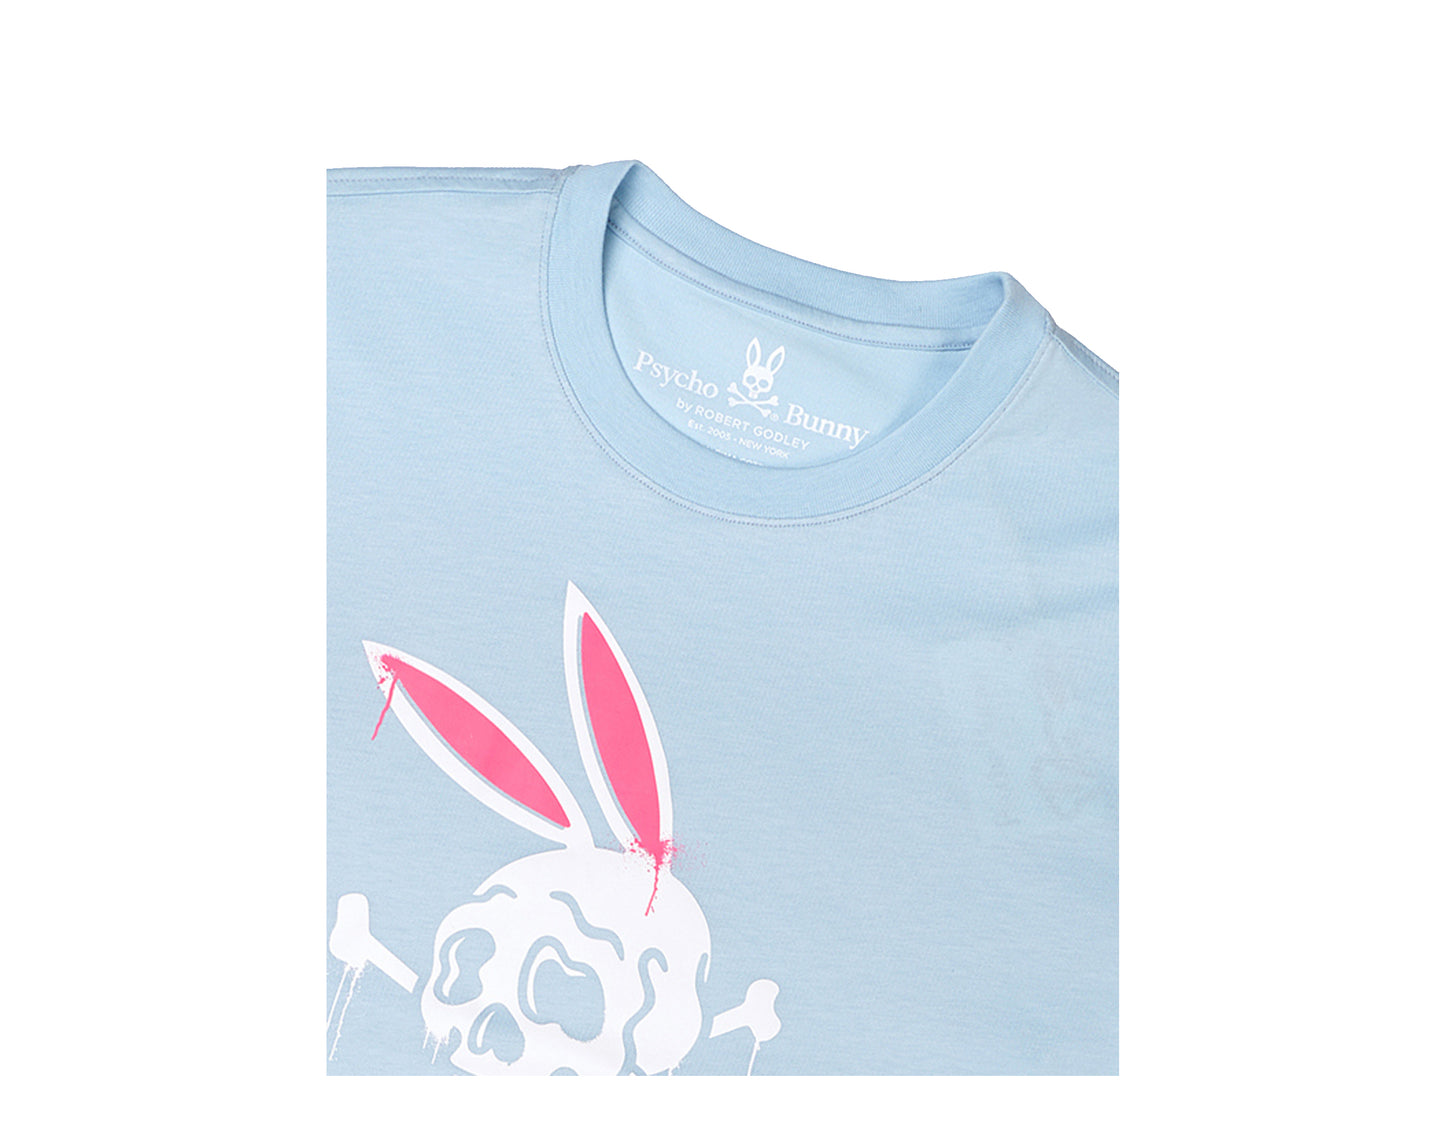 Psycho Bunny Gorton Graphic Men's Tee Shirt